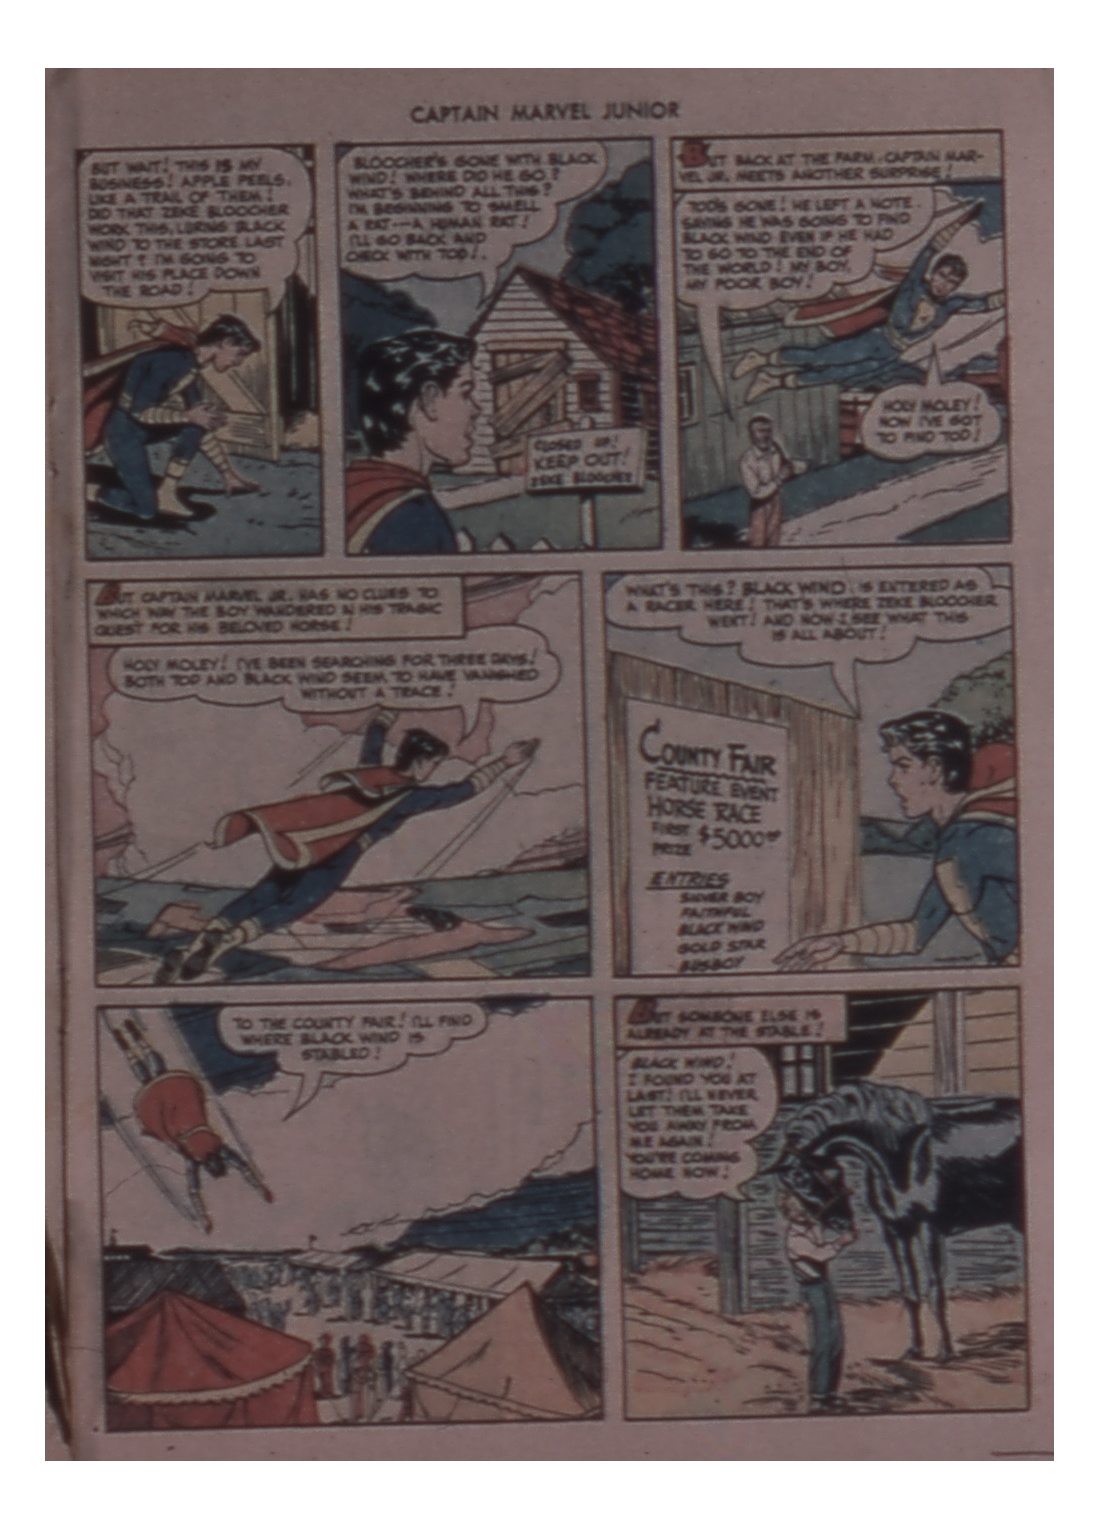 Read online Captain Marvel, Jr. comic -  Issue #80 - 21